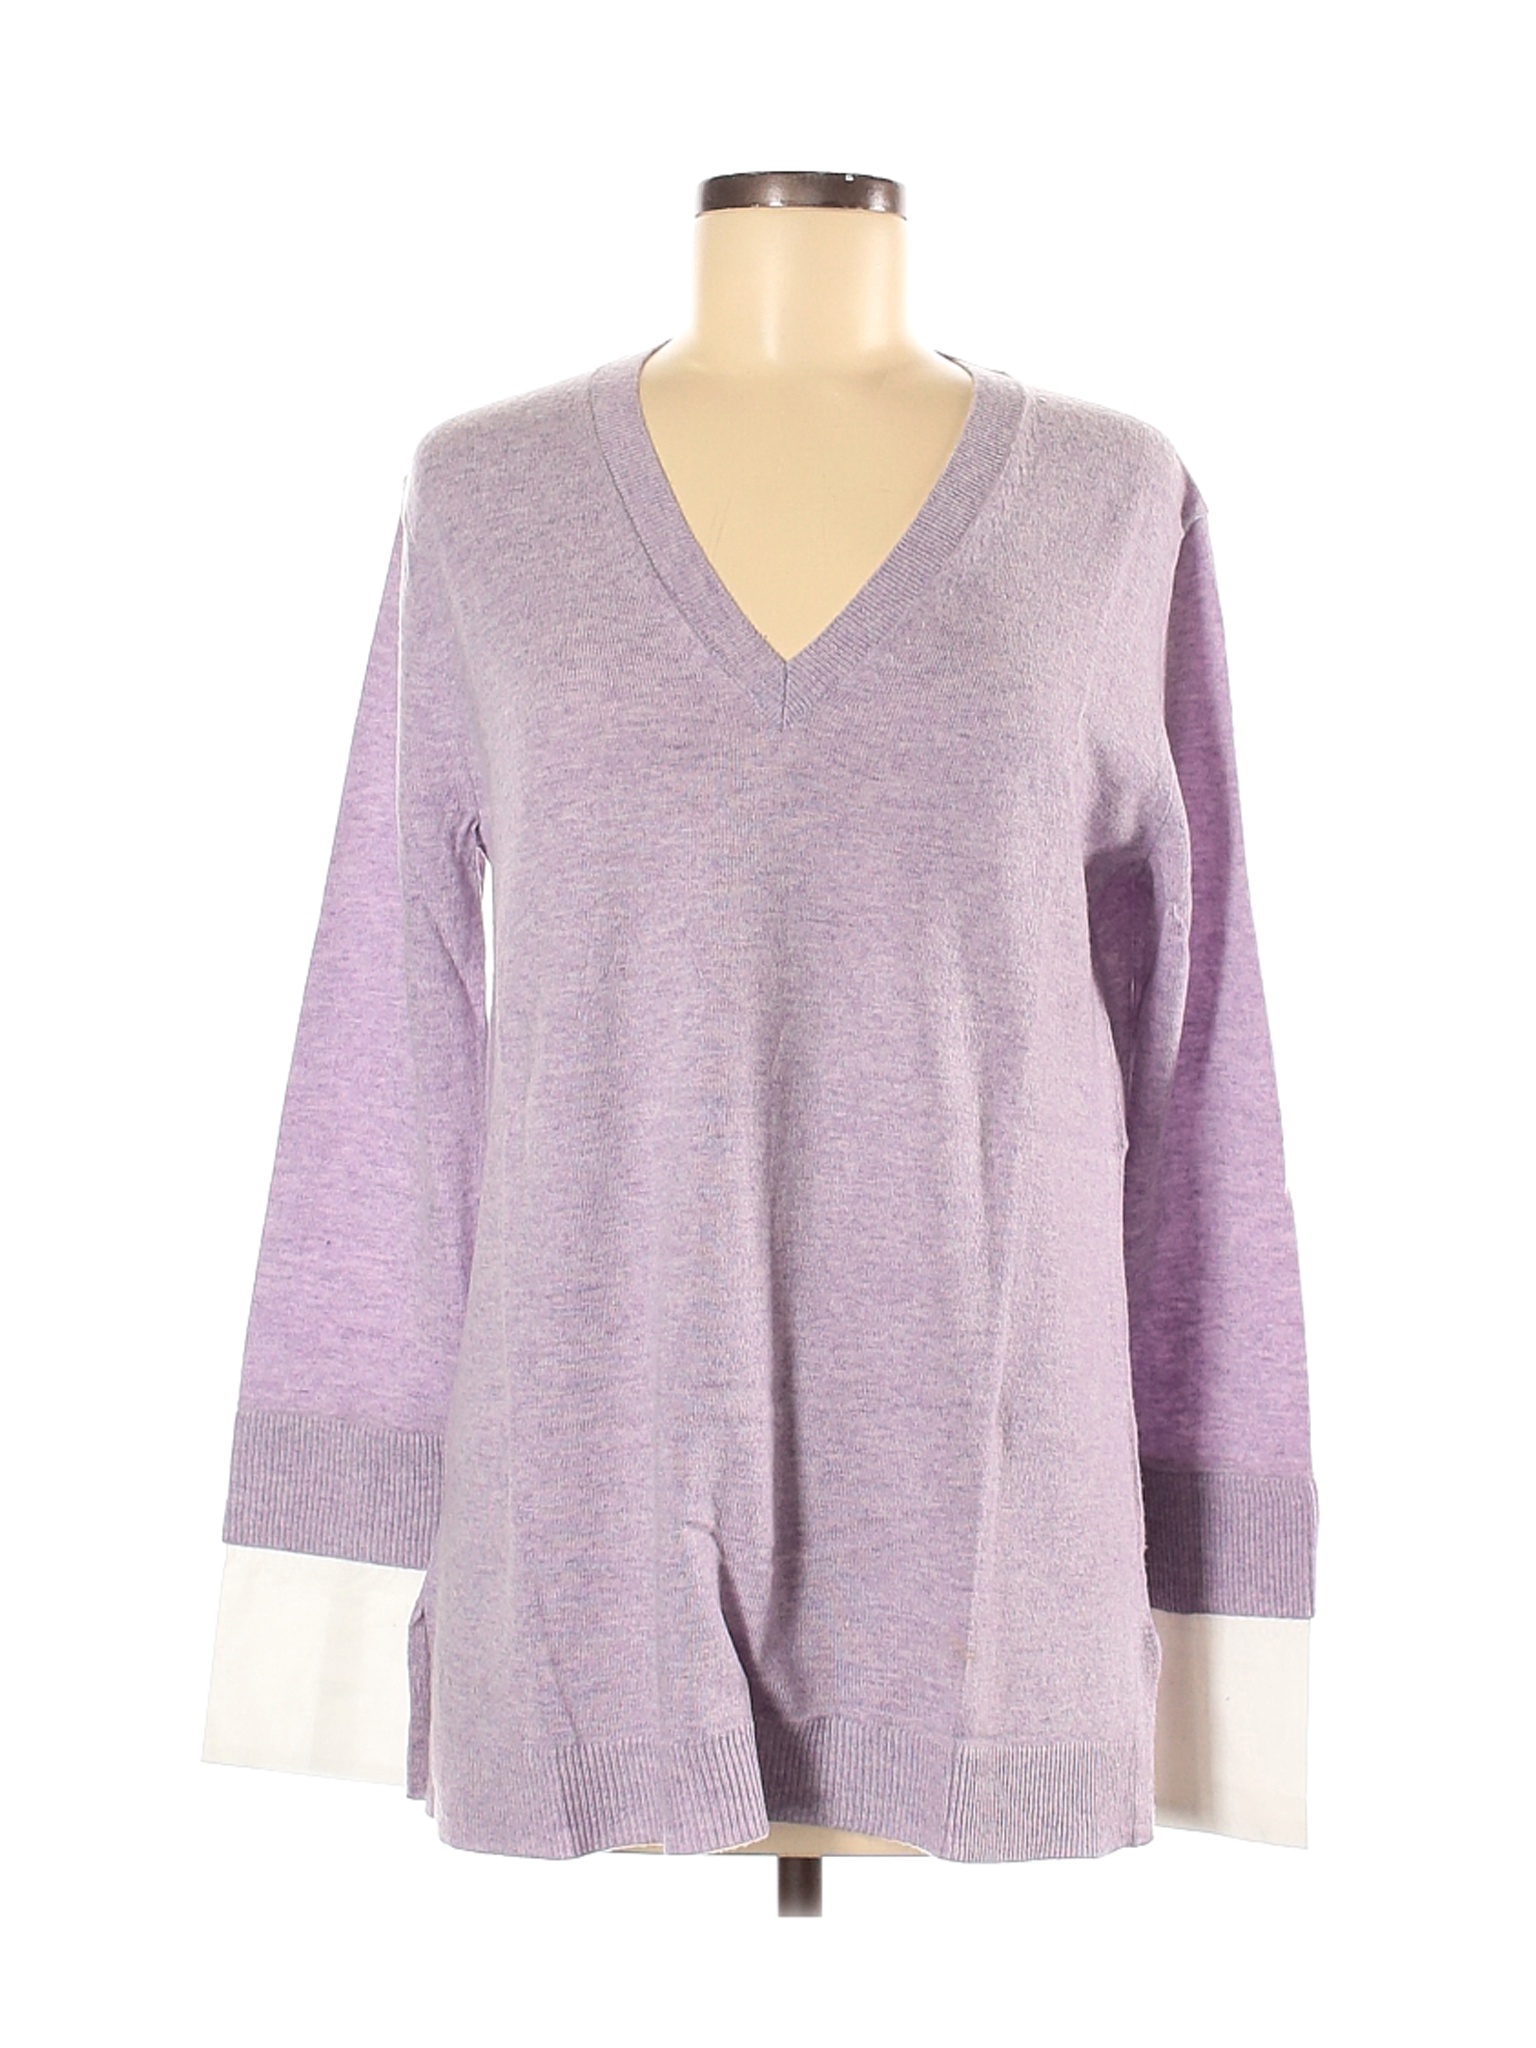 J.Crew Women Purple Pullover Sweater M | eBay